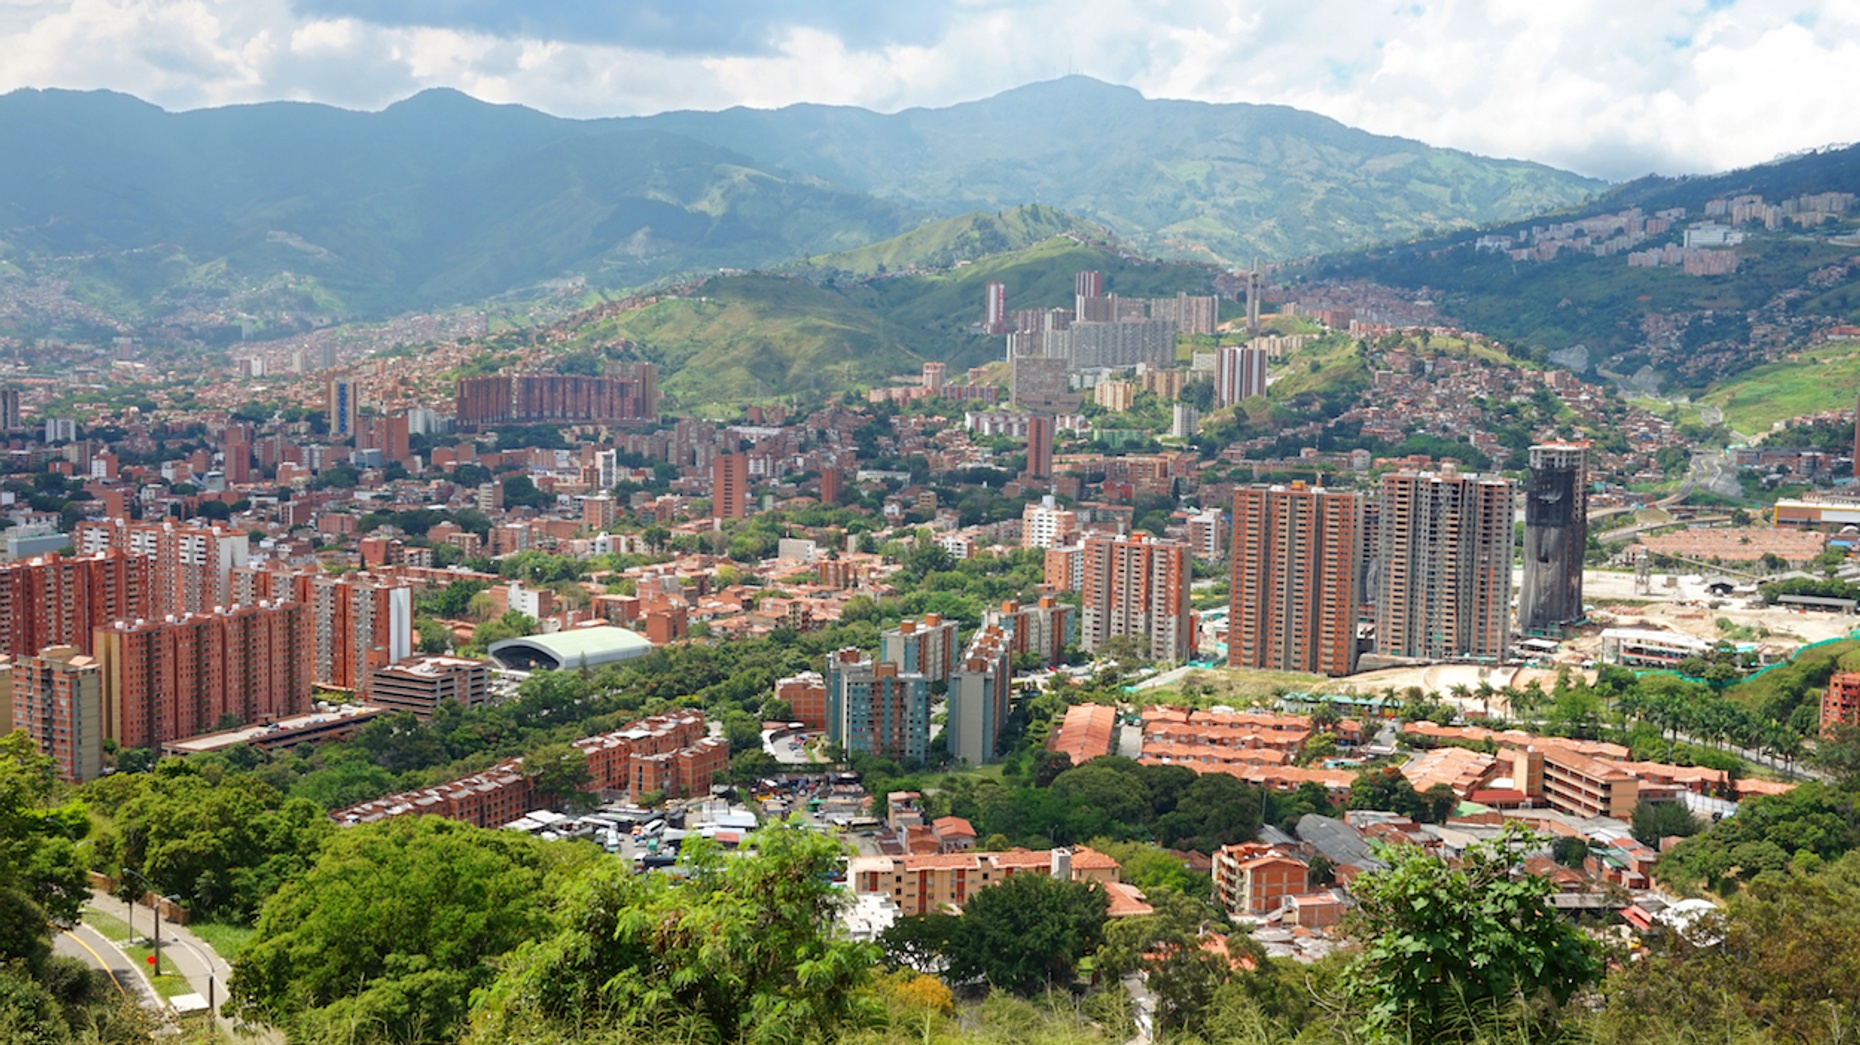 Guided Cultural & Social Tour of Medellín